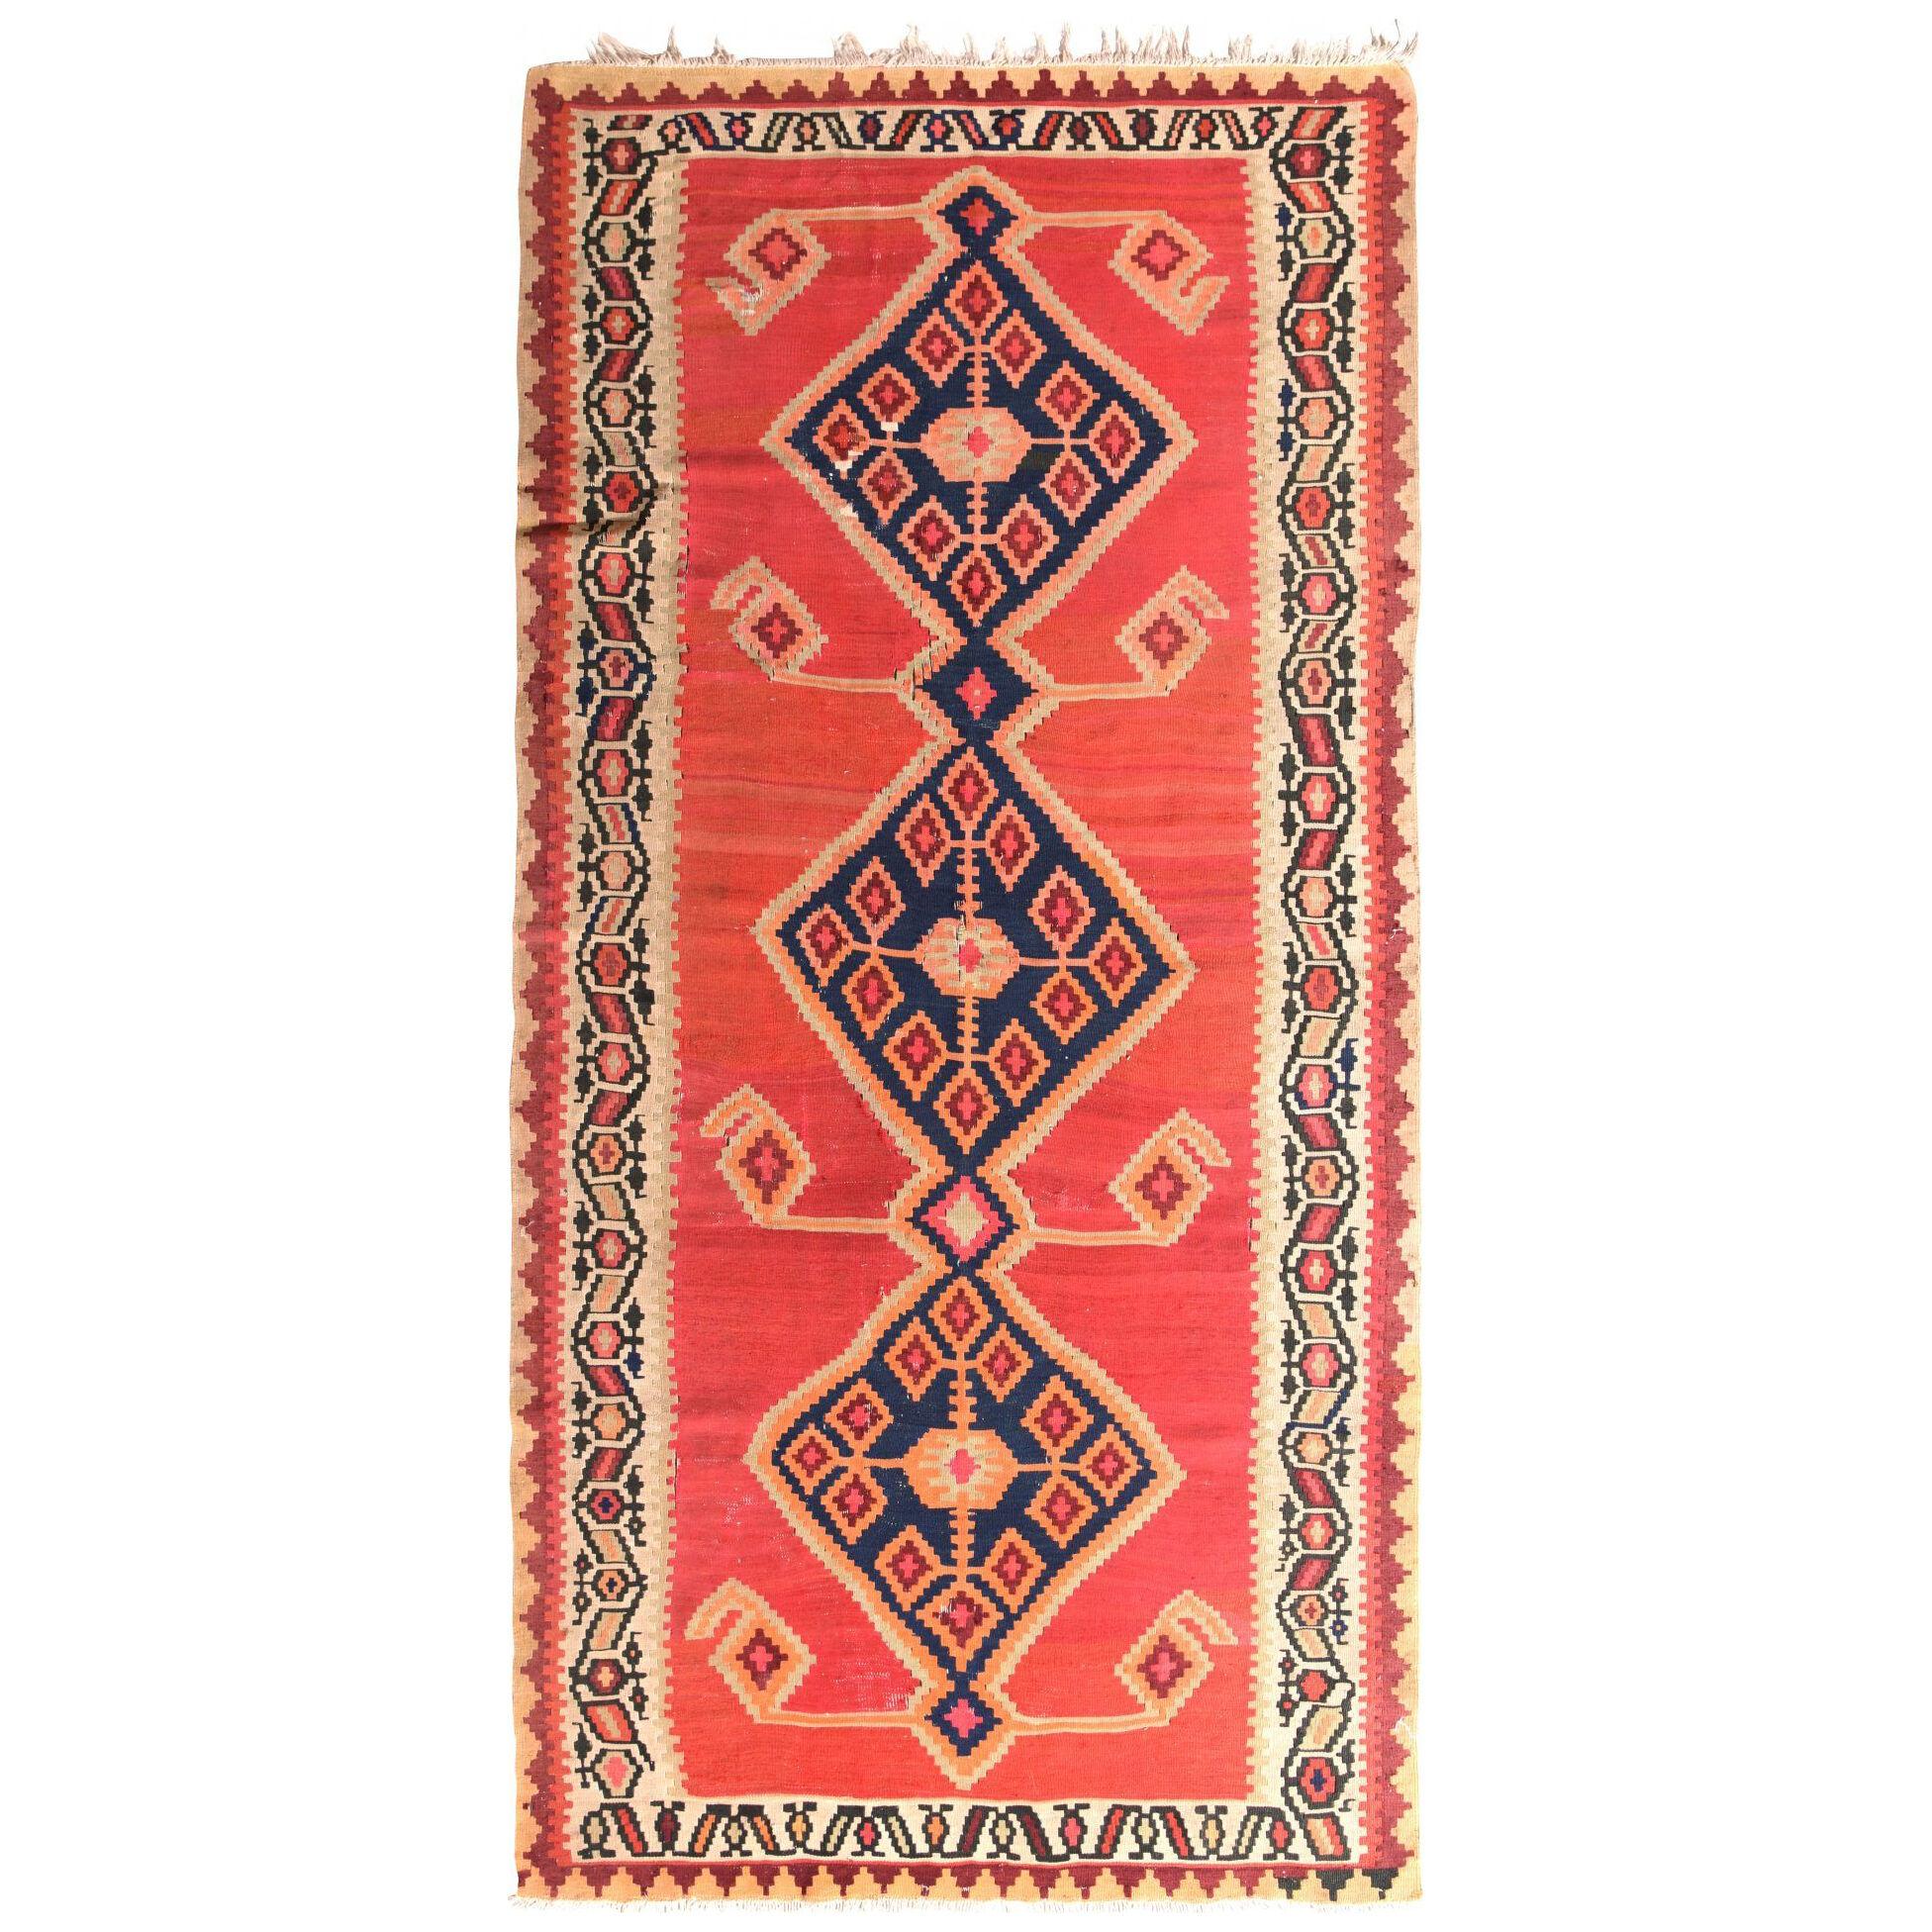 Vintage Mid-century Persian Kilim Rug in Red and Beige Geometric Pattern